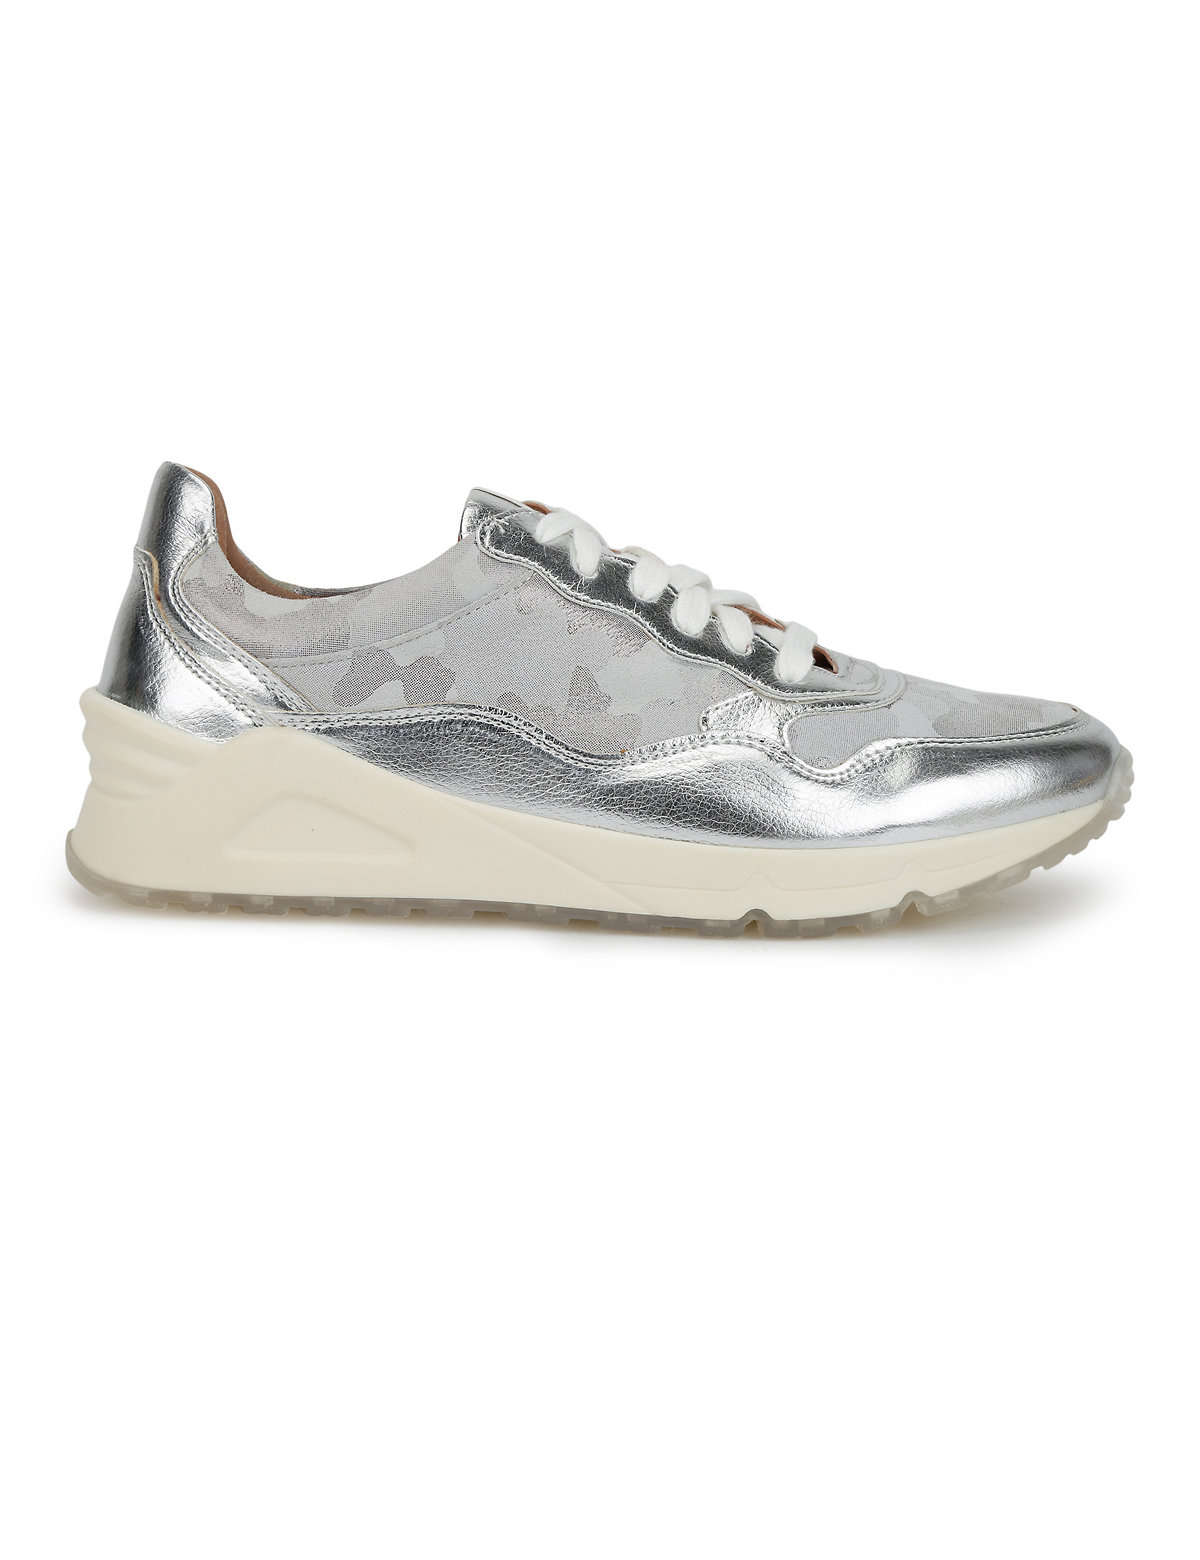 Blizzard Silver Shoe